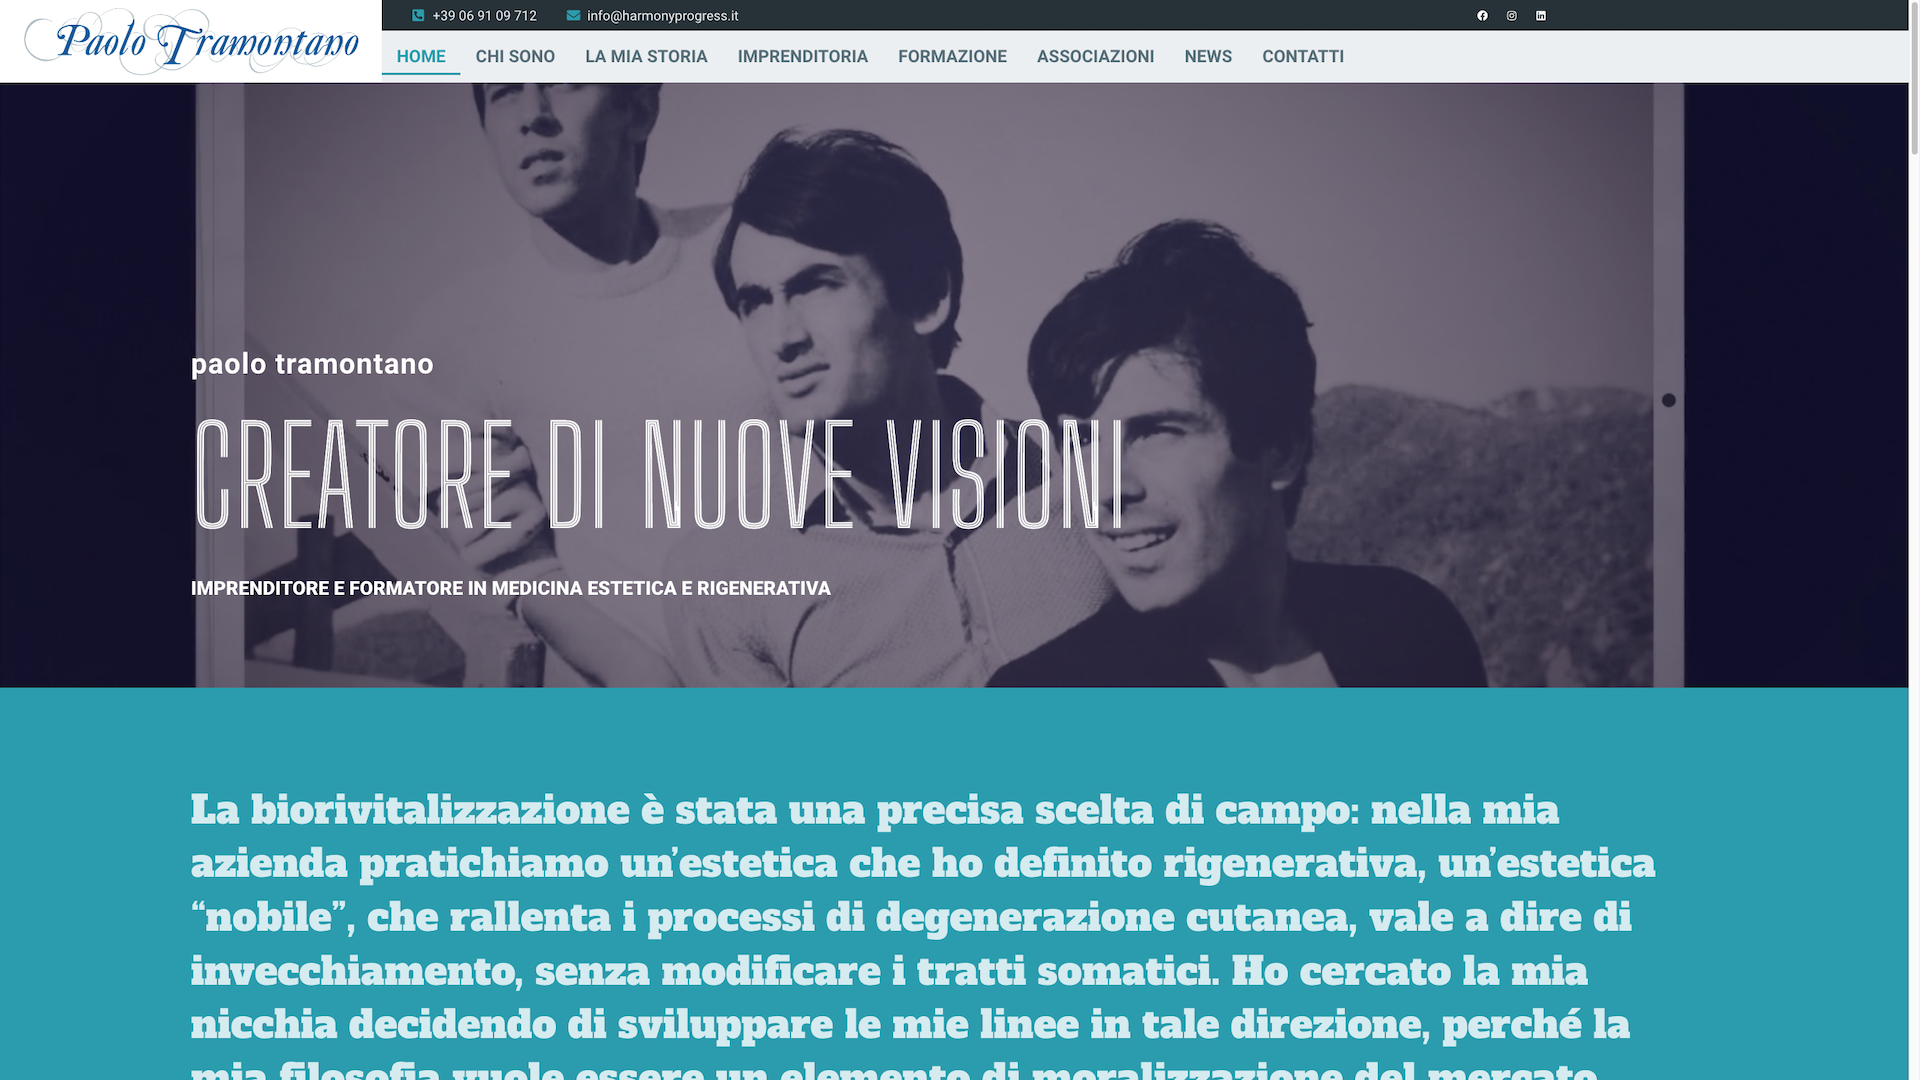 Paolo tramontano - home page - Portfolio Piero Muscari